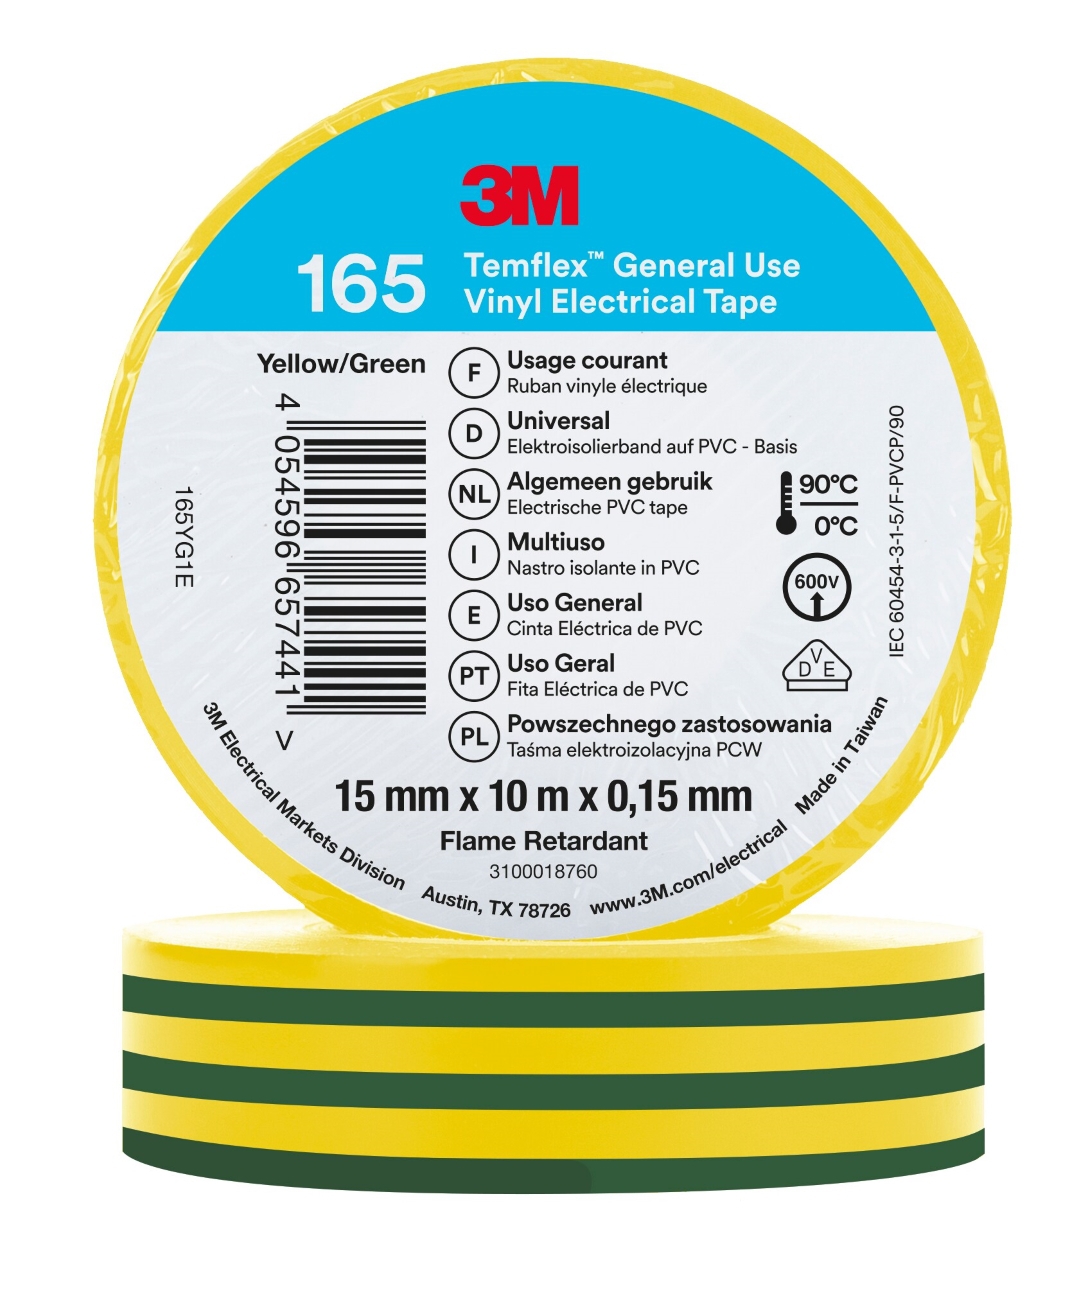 3M Temflex 165 vinyl electrical insulation tape, green/yellow, 15 mm x 10 m, 0.15 mm